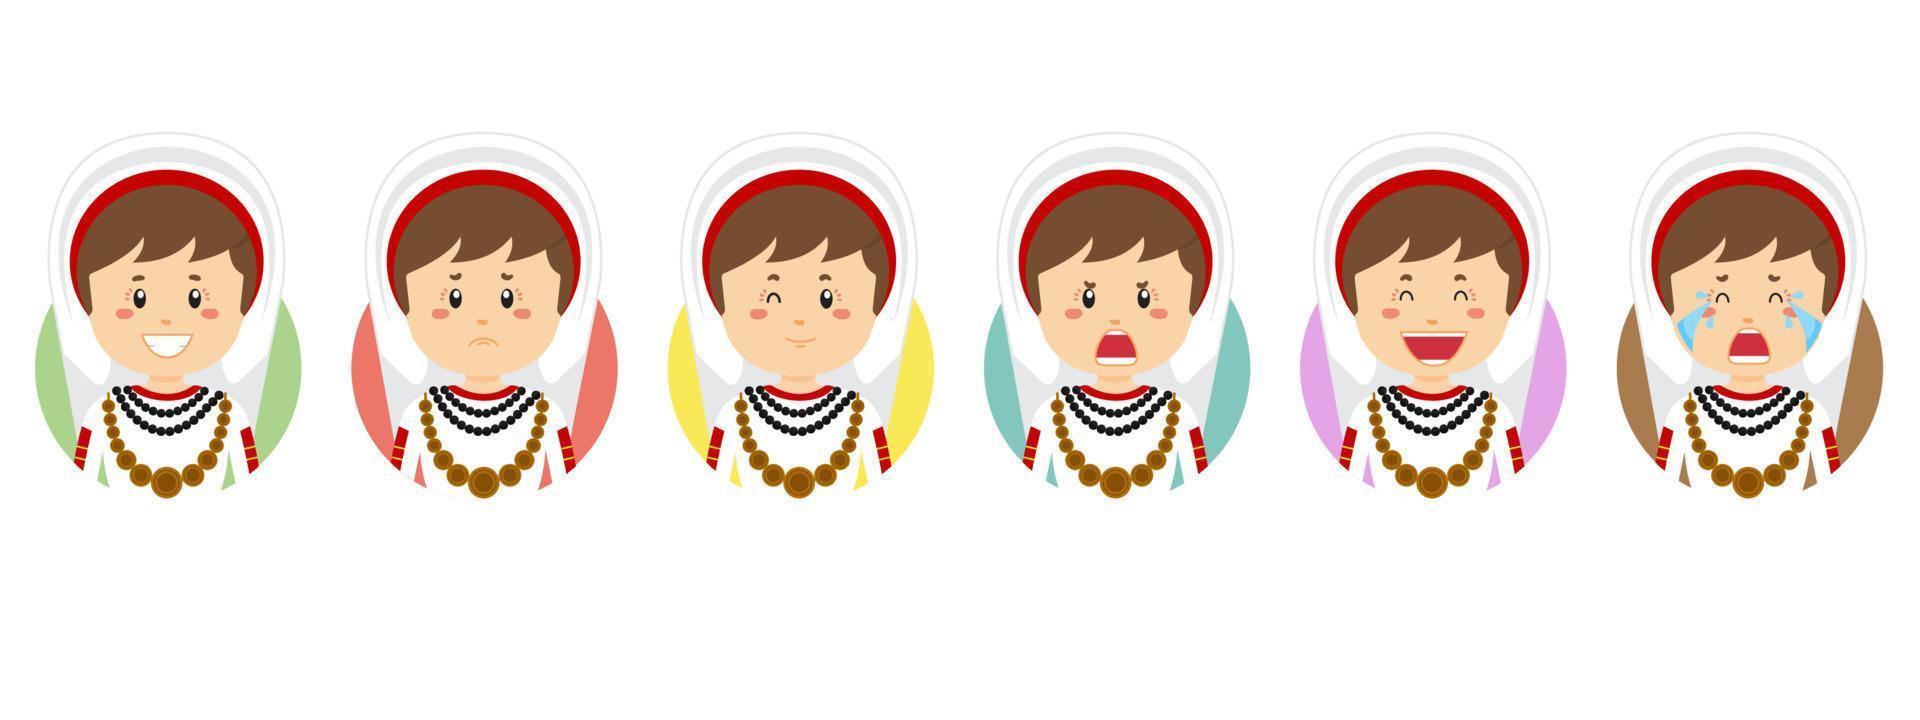 Roemenen avatar met verschillende expressie vector